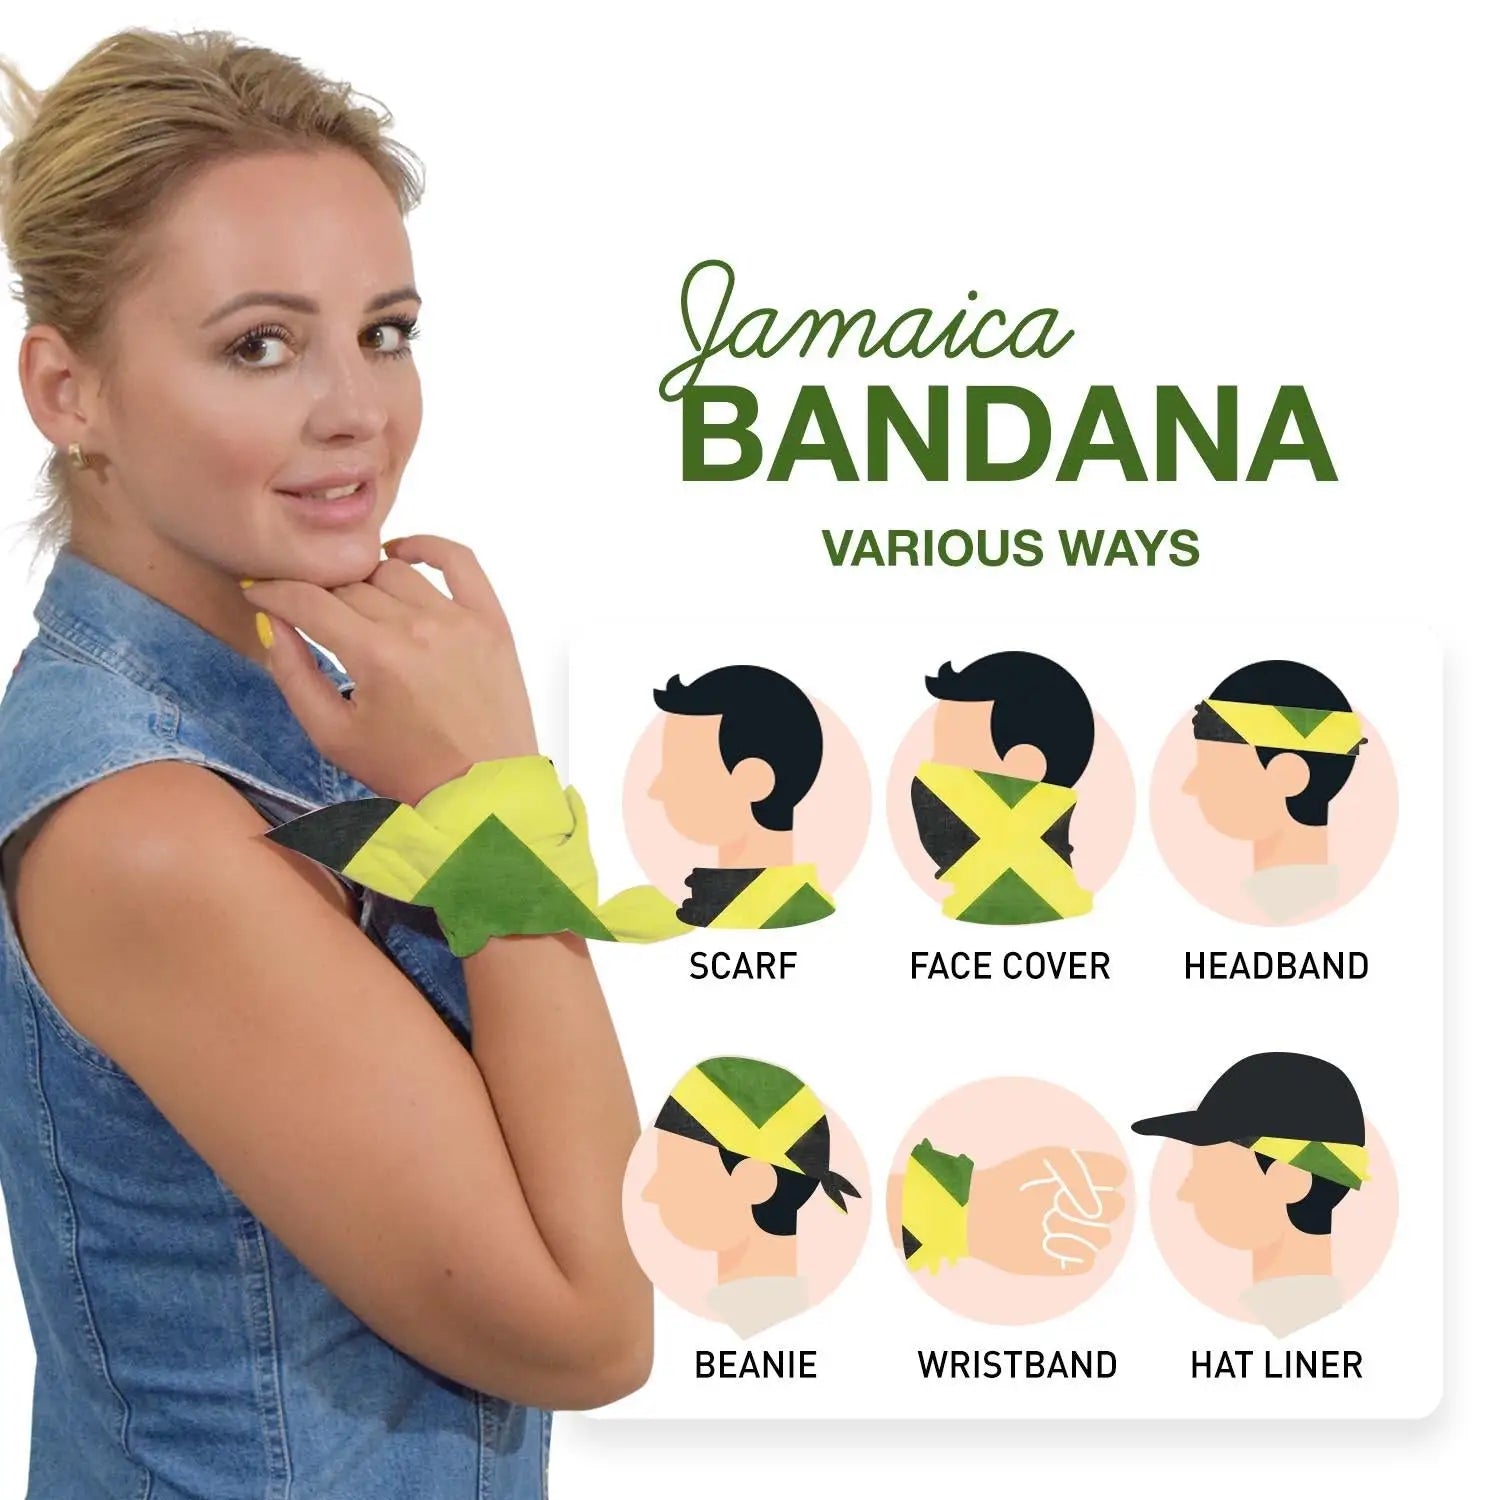 Woman wearing Jamaica flag bandana with banana on arm